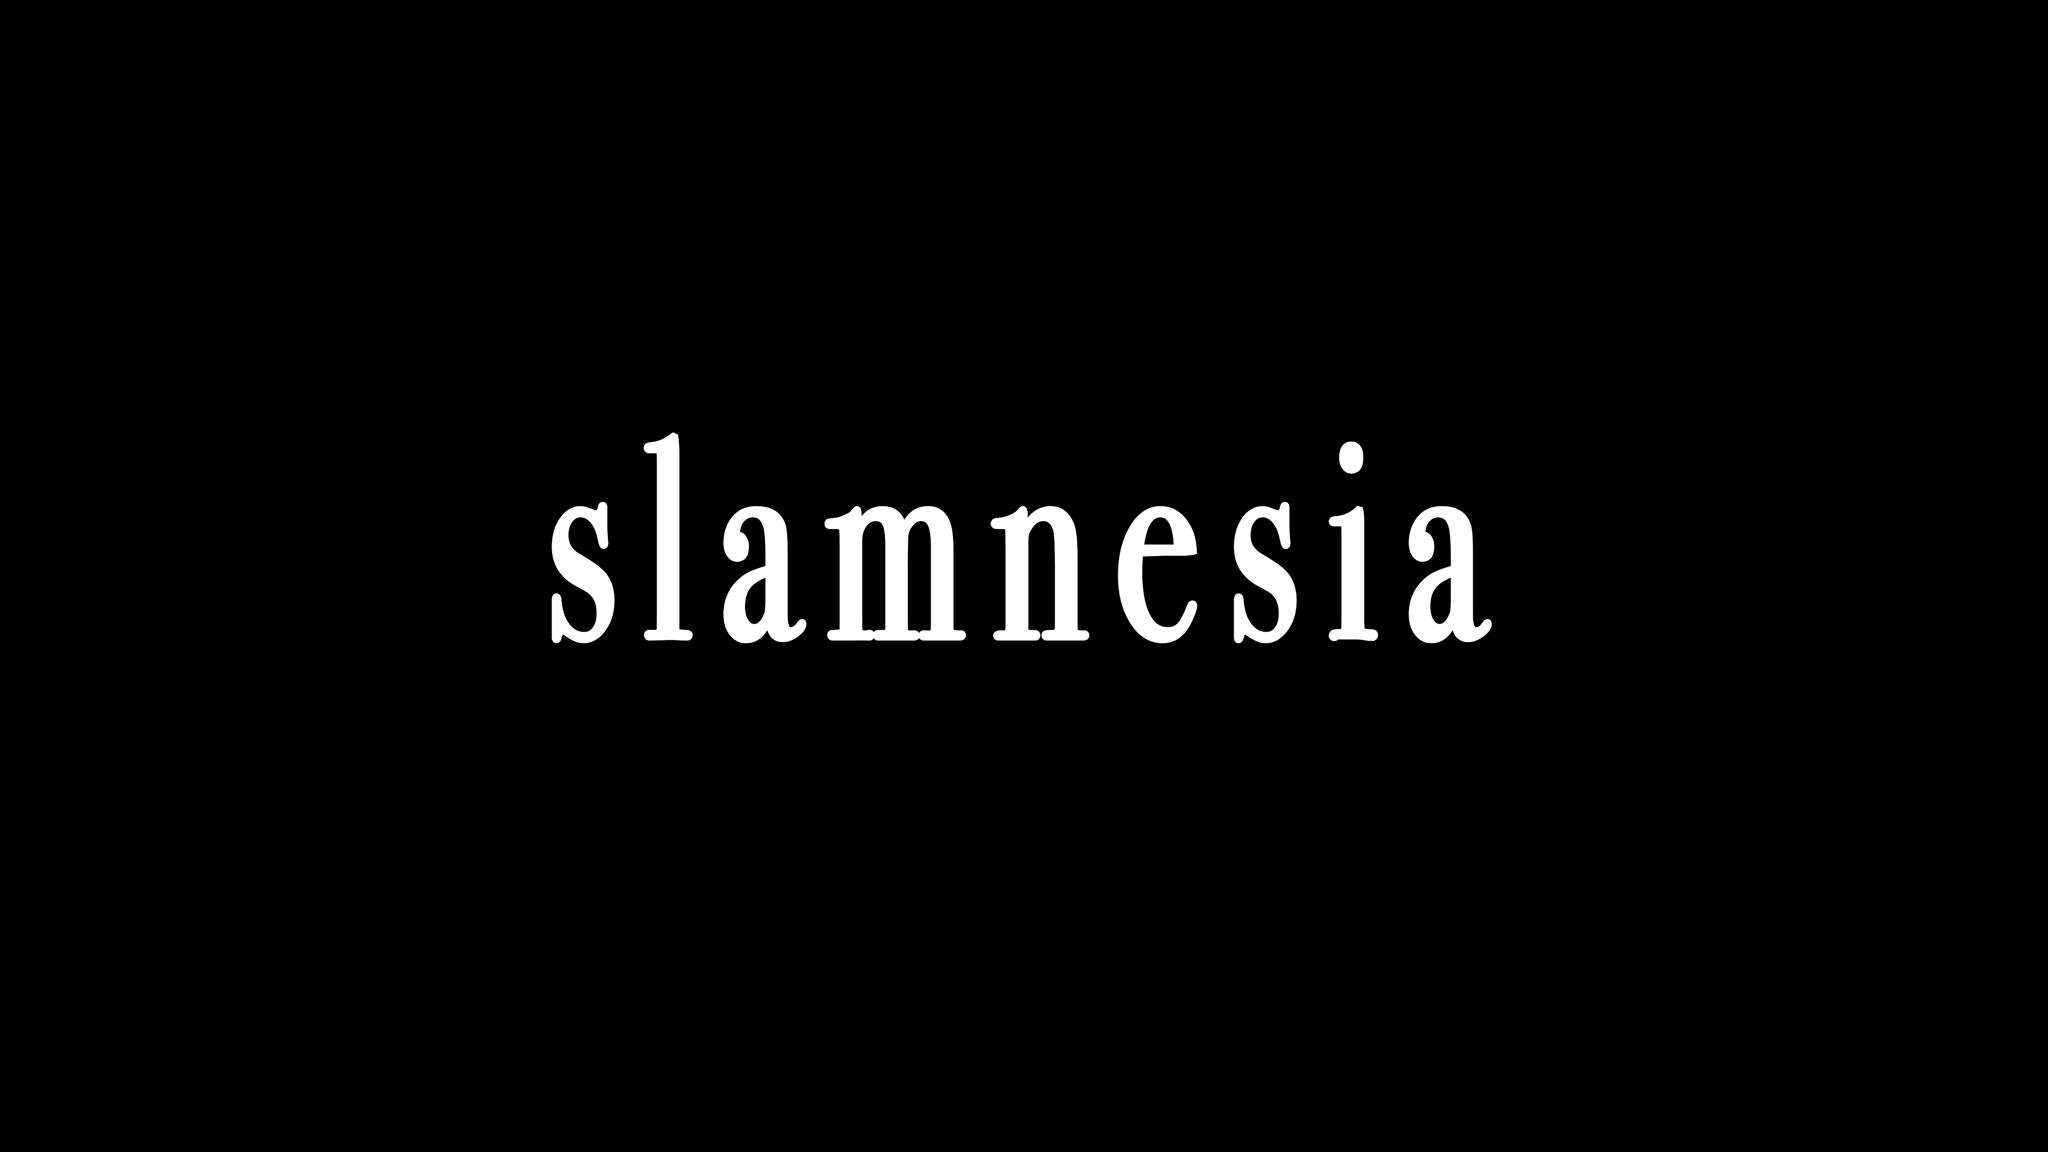 Slamnesia